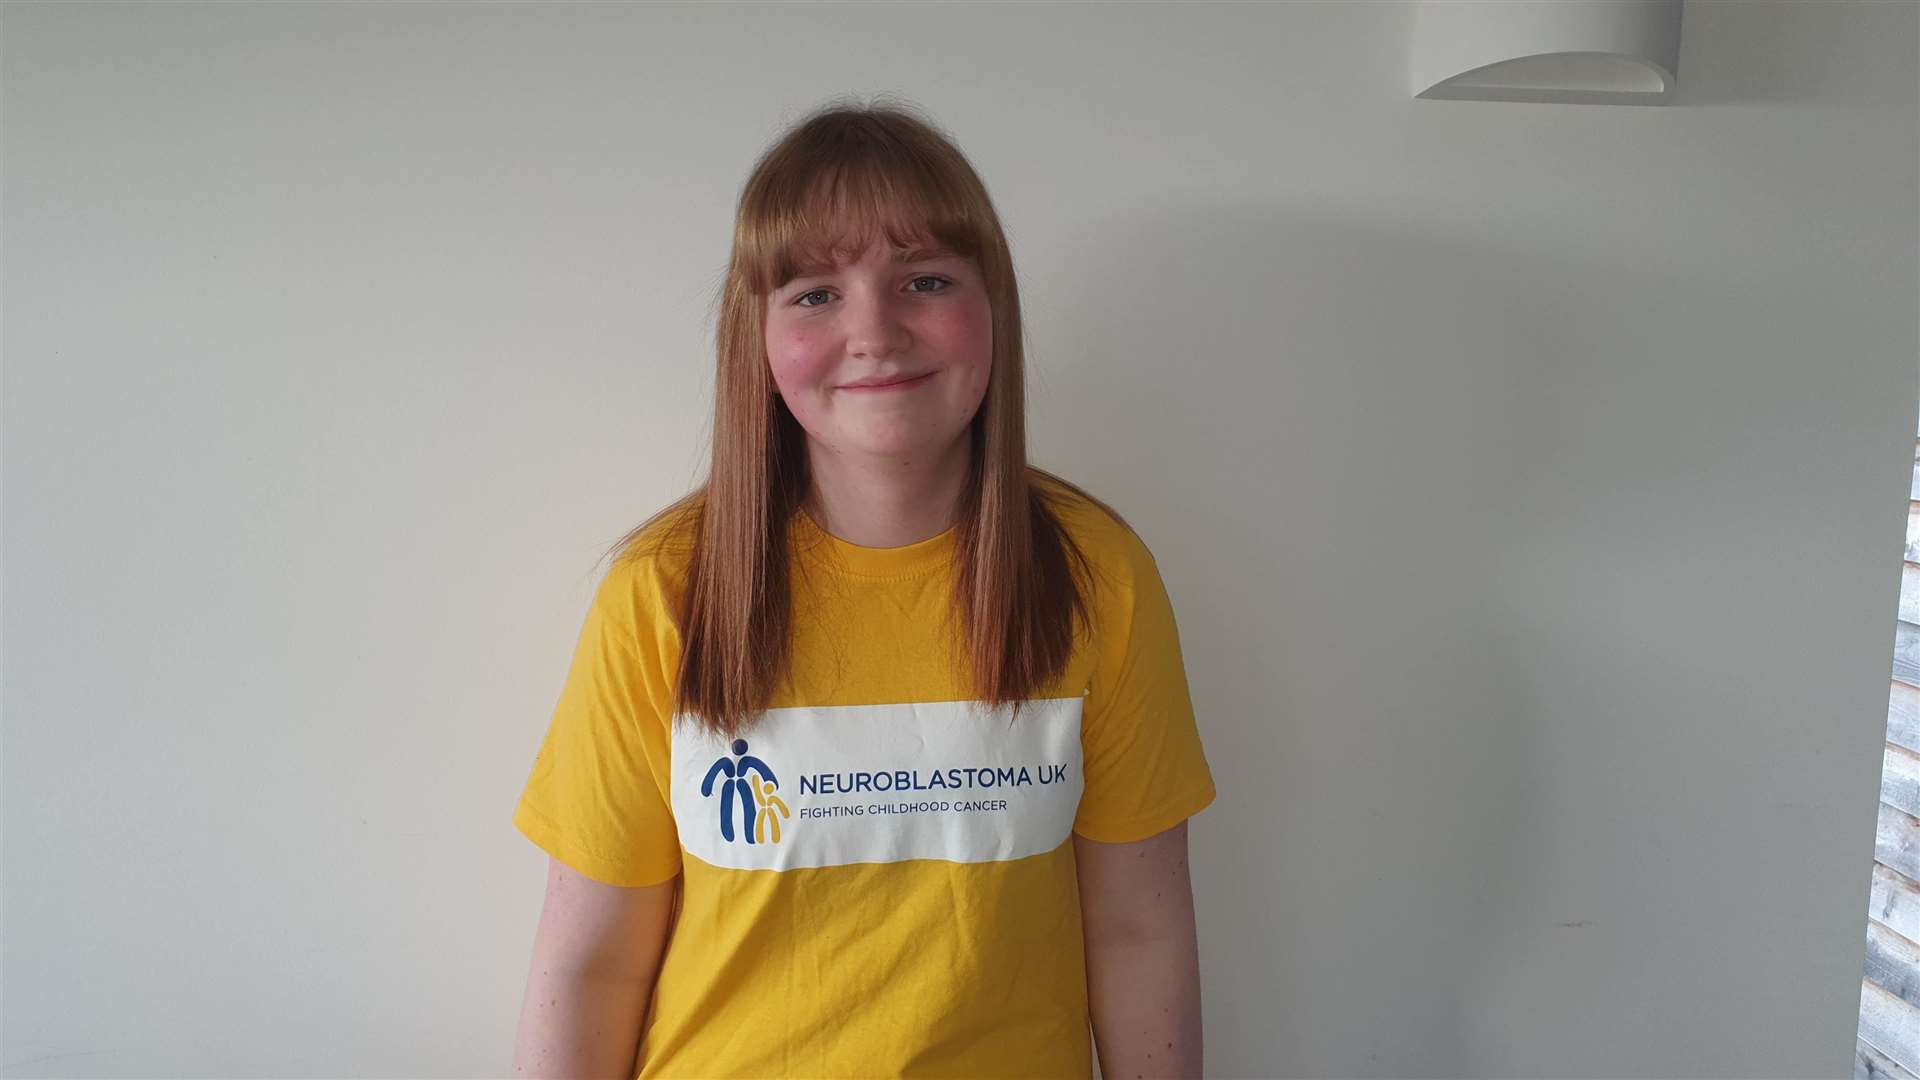 Phoebe Macaskill, cancer survivor, is raising cash for Neuroblastoma UK